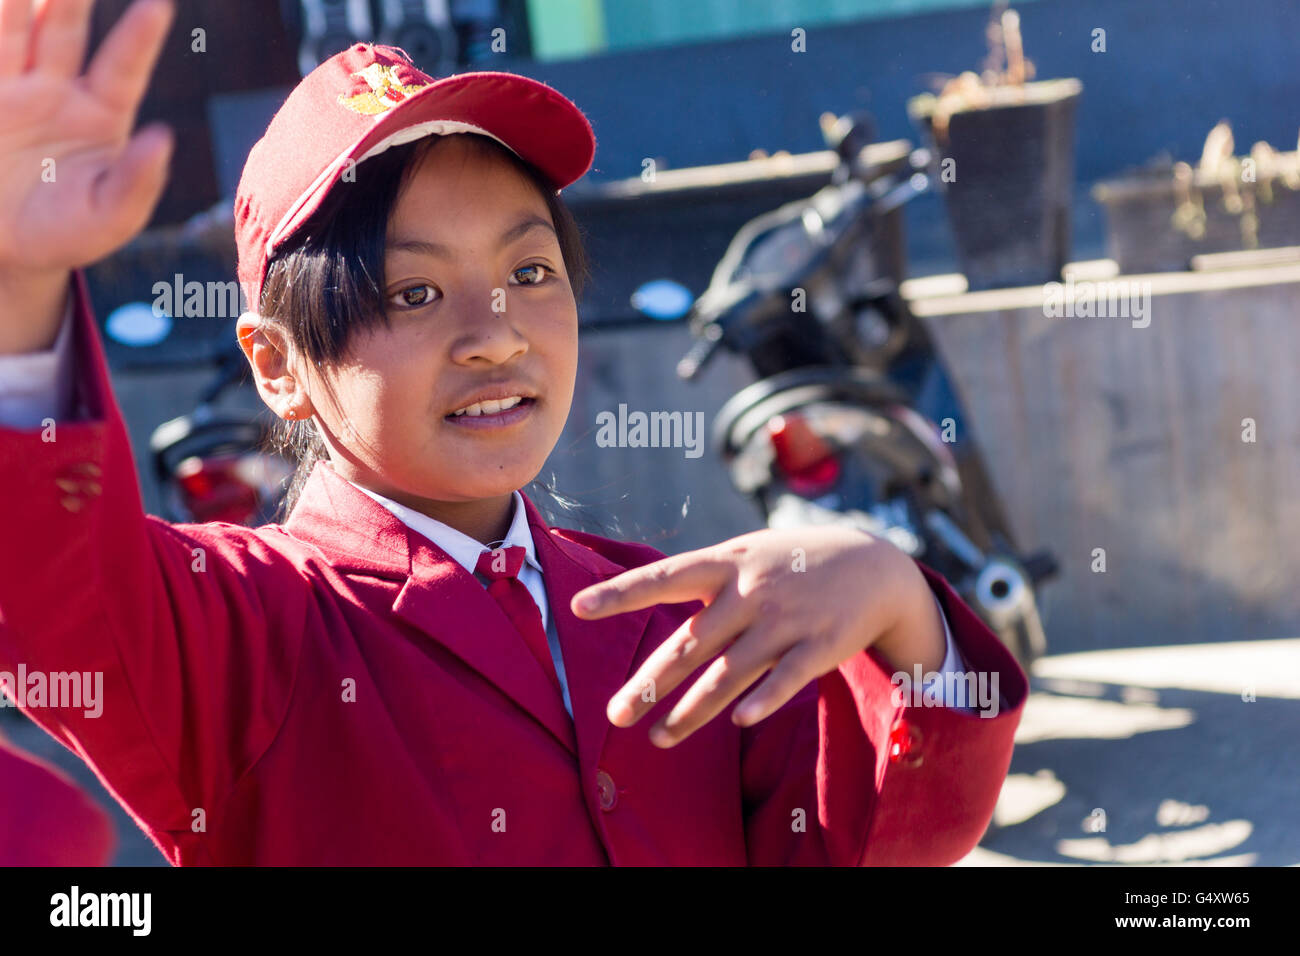 Indonesia, Java, Probolinggo, schoolchild in red uniform Stock Photo